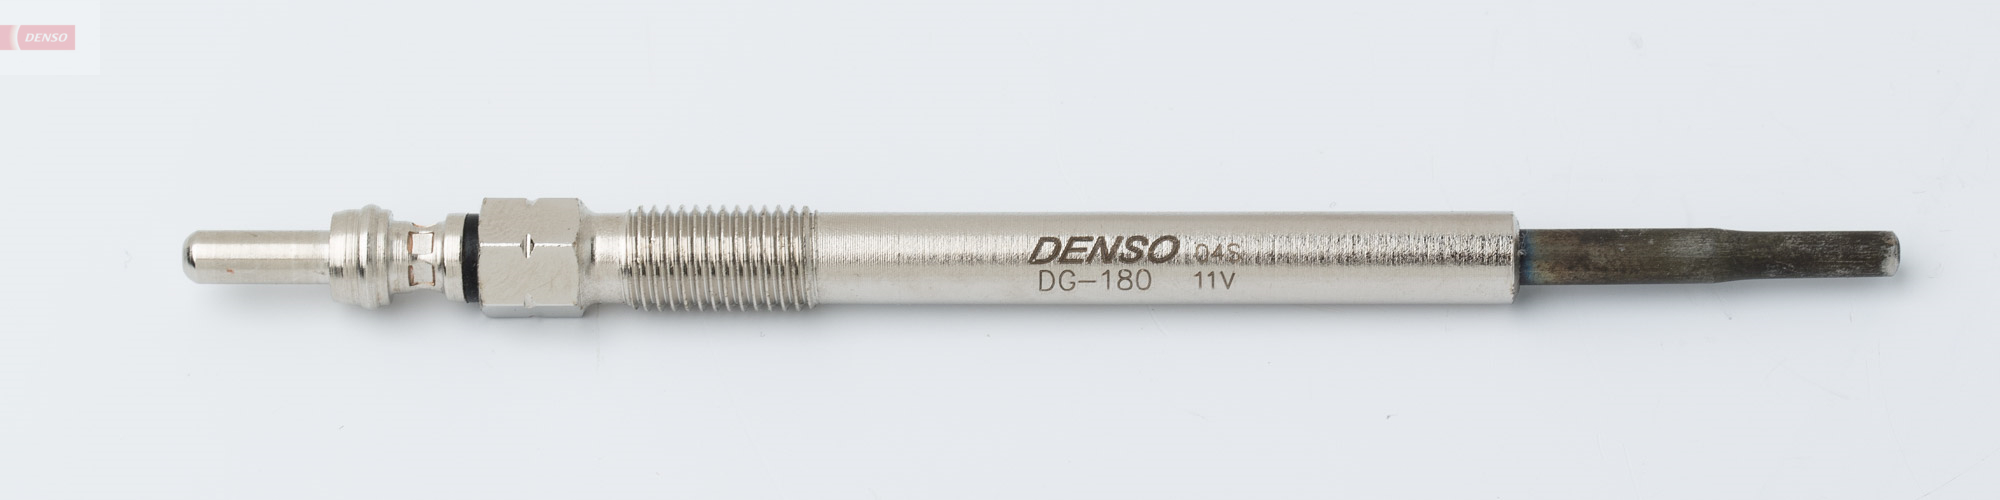 Denso DG-180